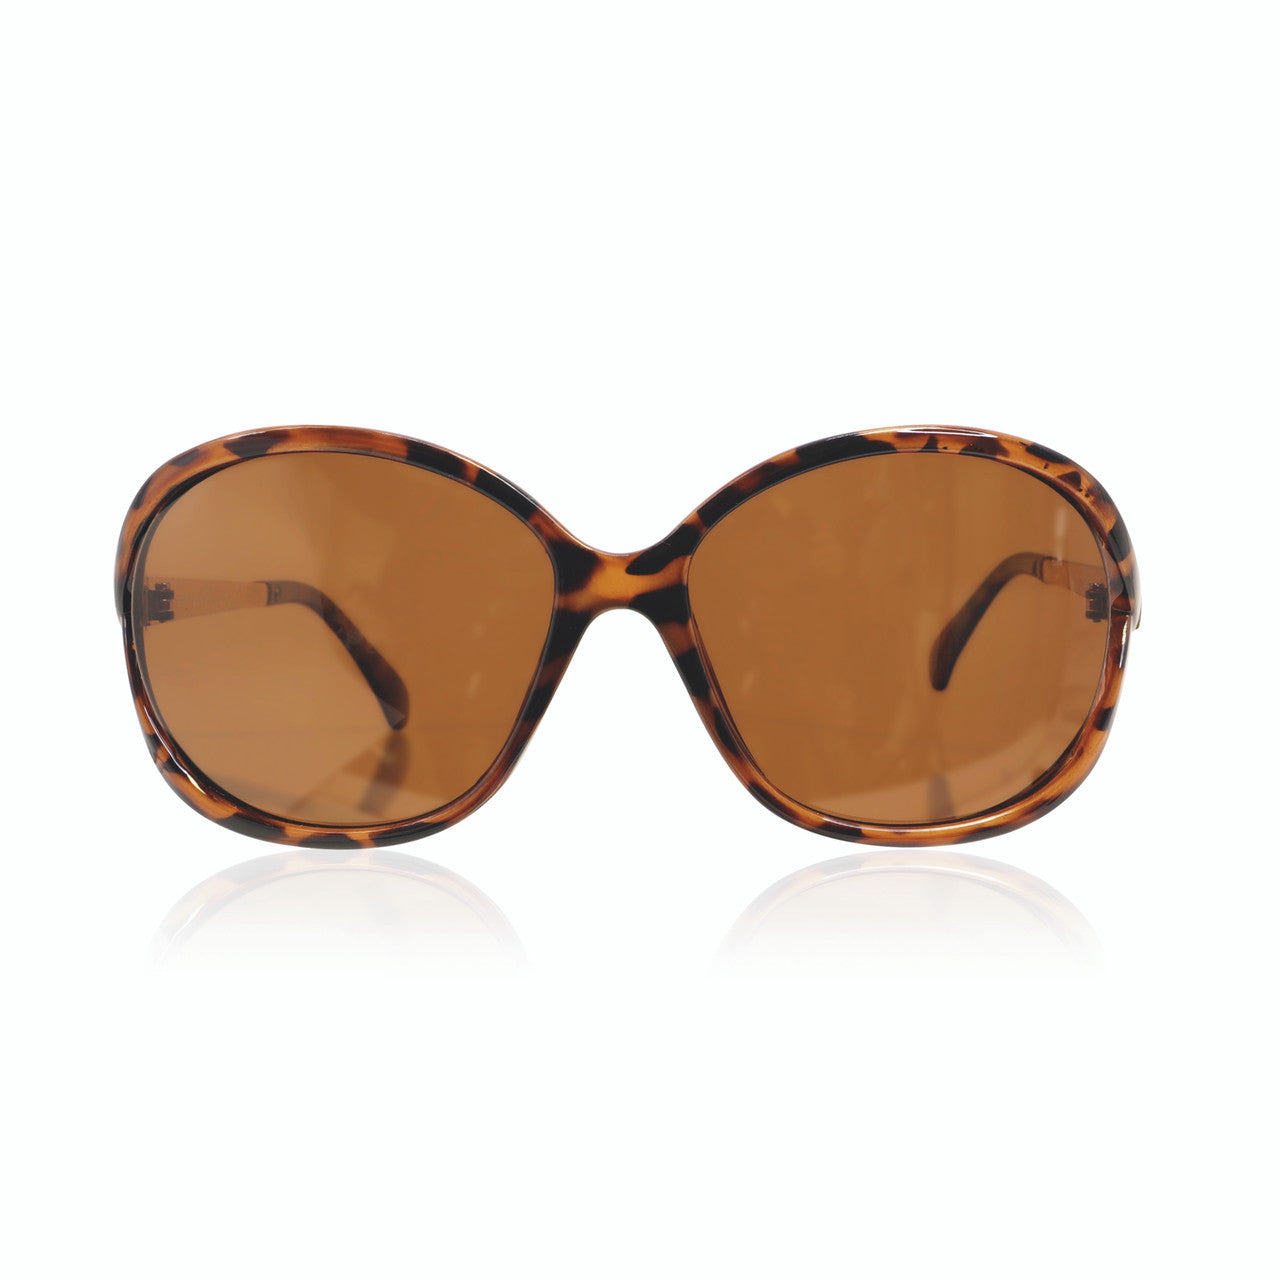 Tipperary Crystal Monaco Tortoise Sunglasses